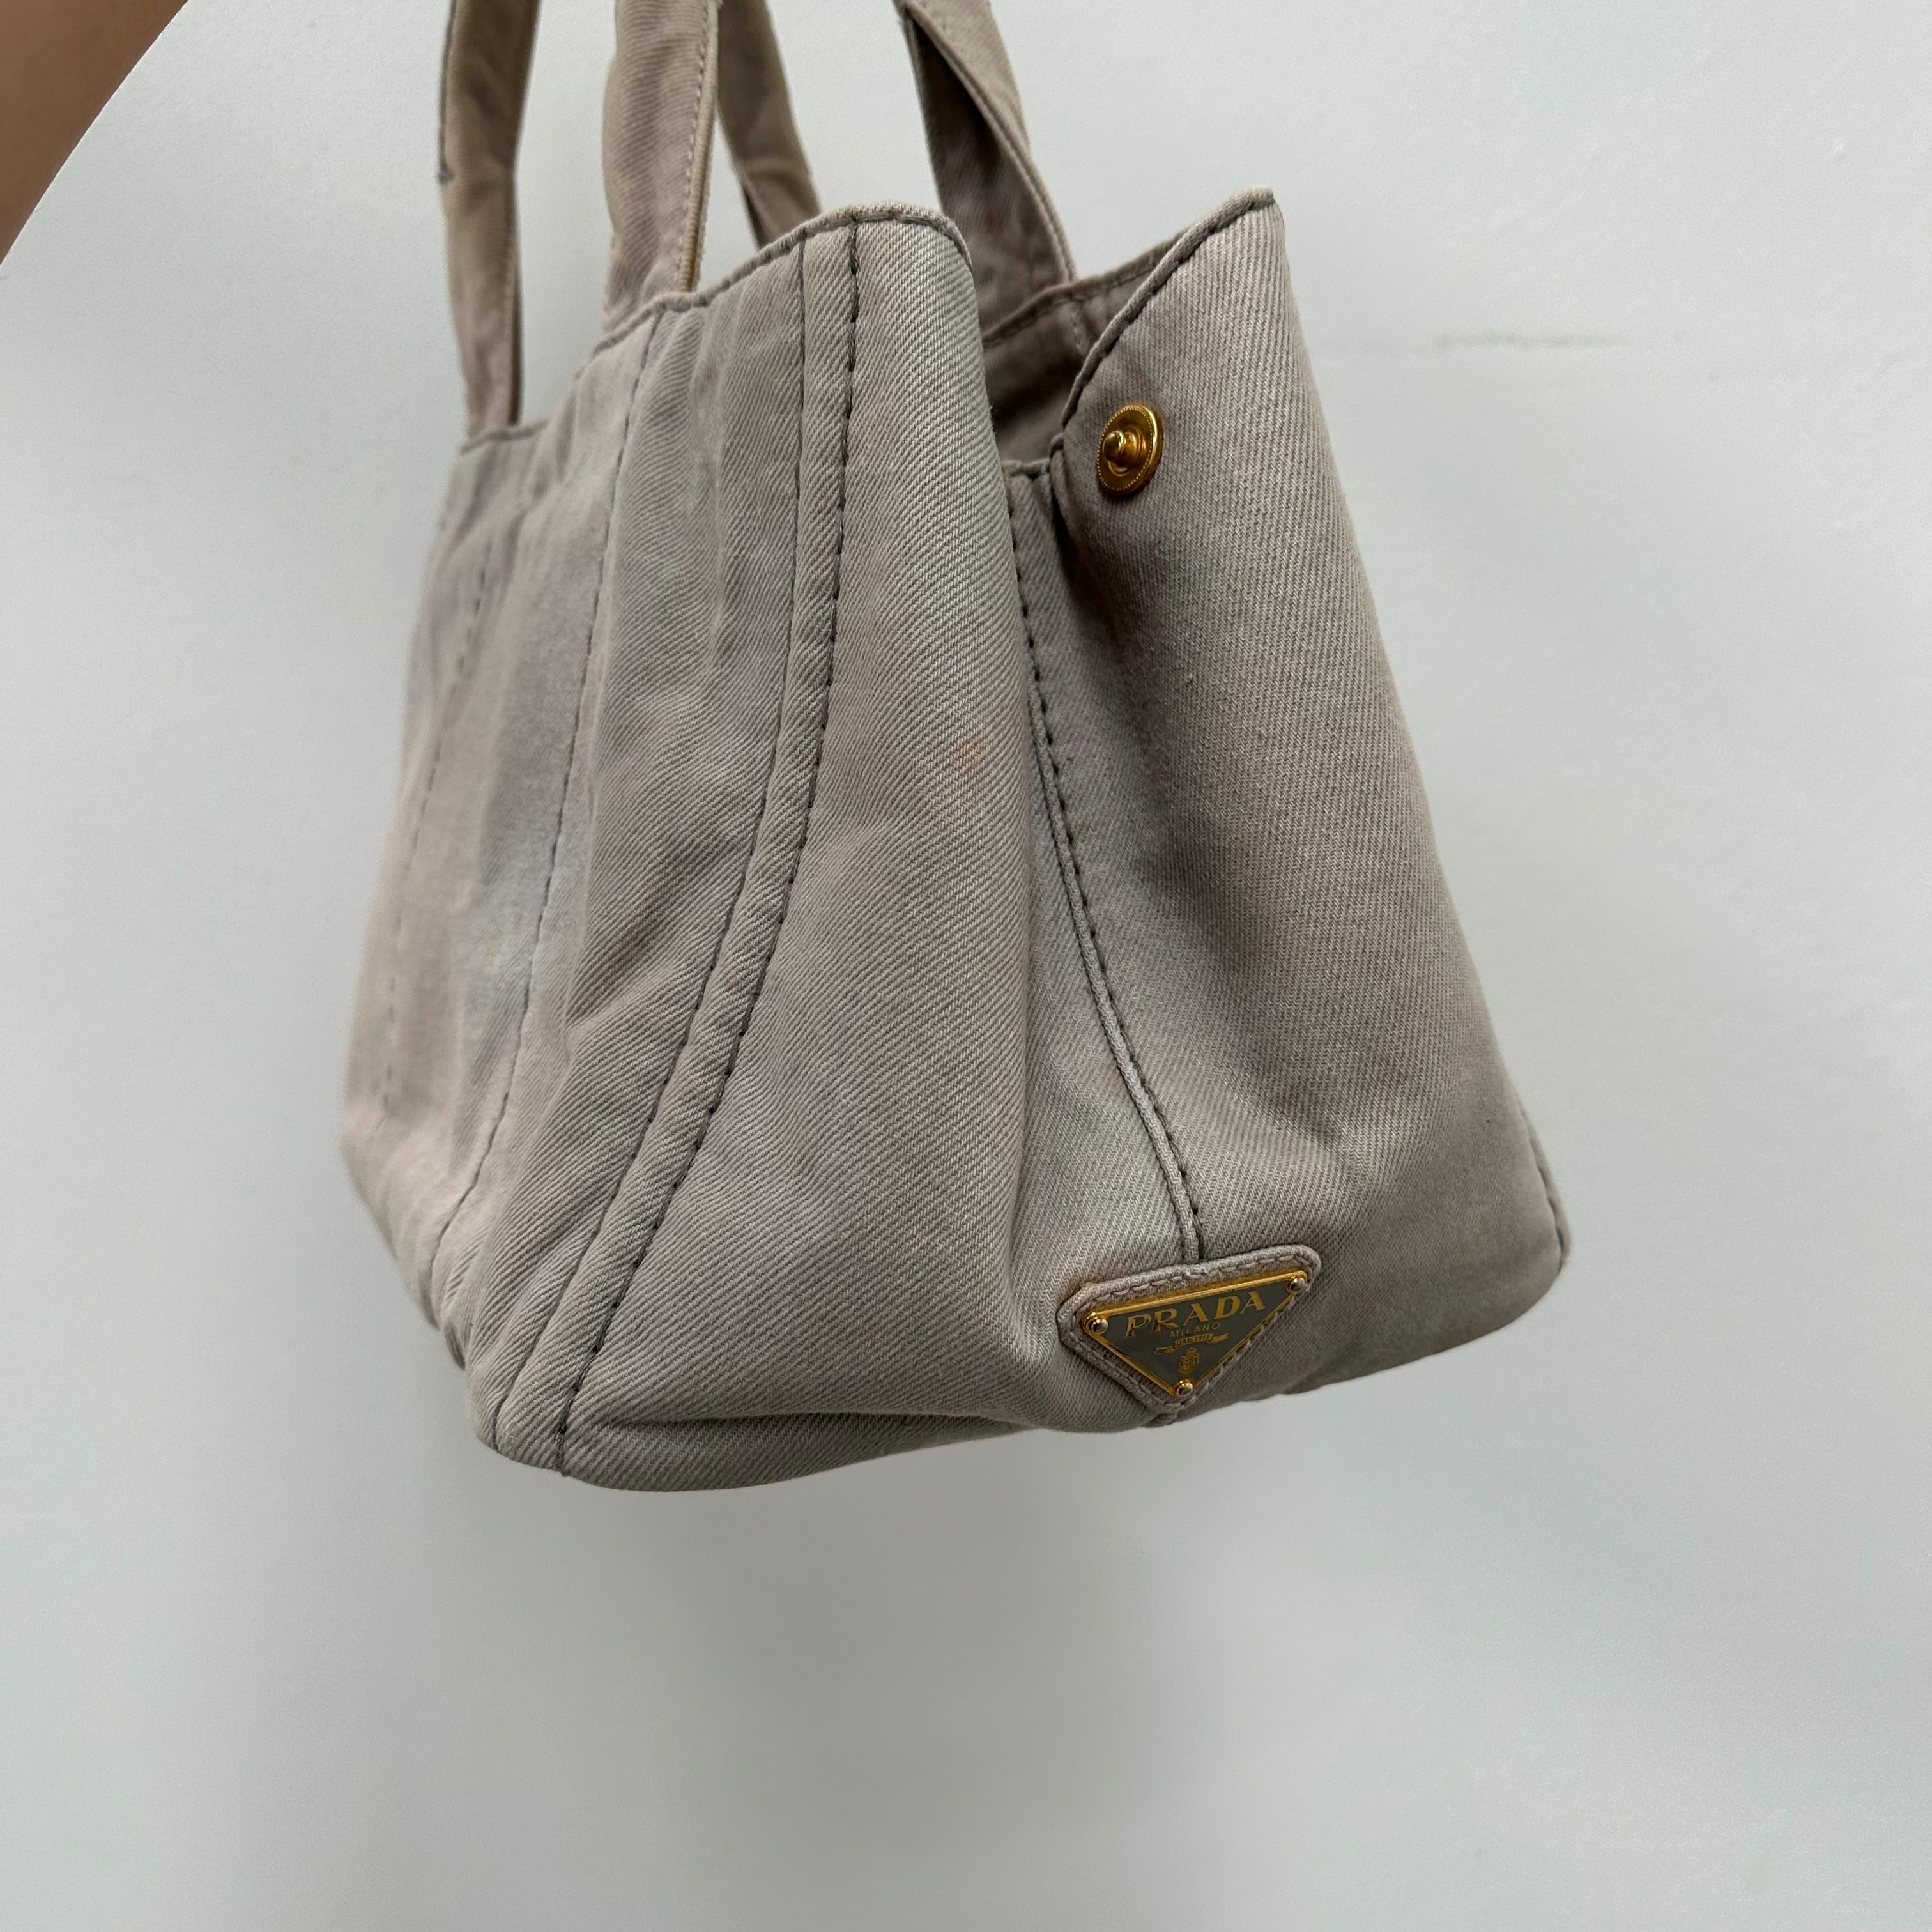 Prada Canapa MM Hand Bag Canvas Grey